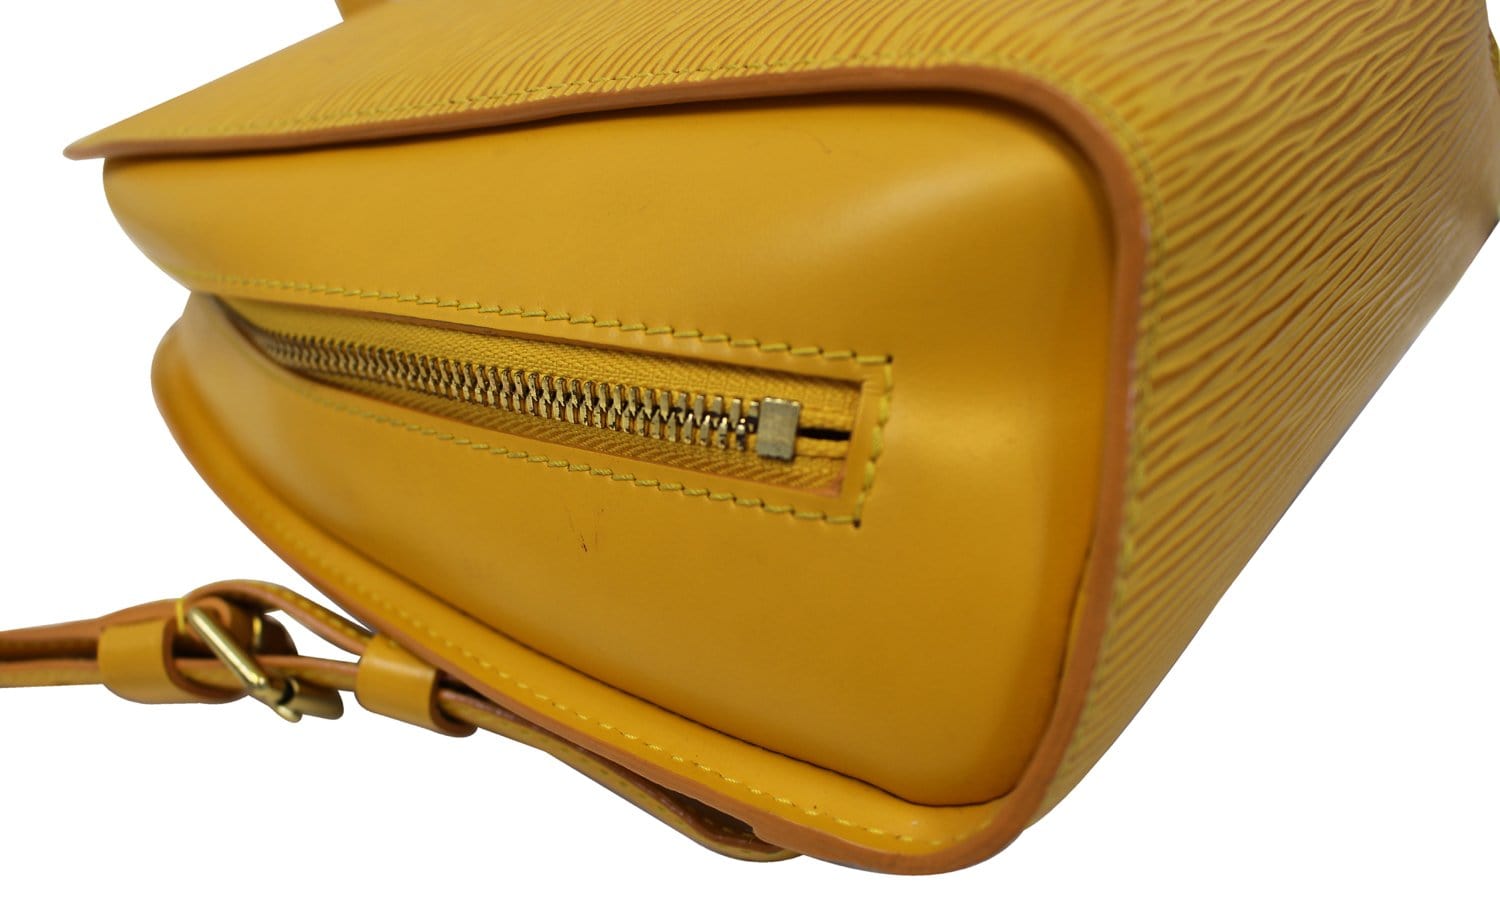 Louis Vuitton Vintage - Epi Mabillon Backpack - Orange - Leather